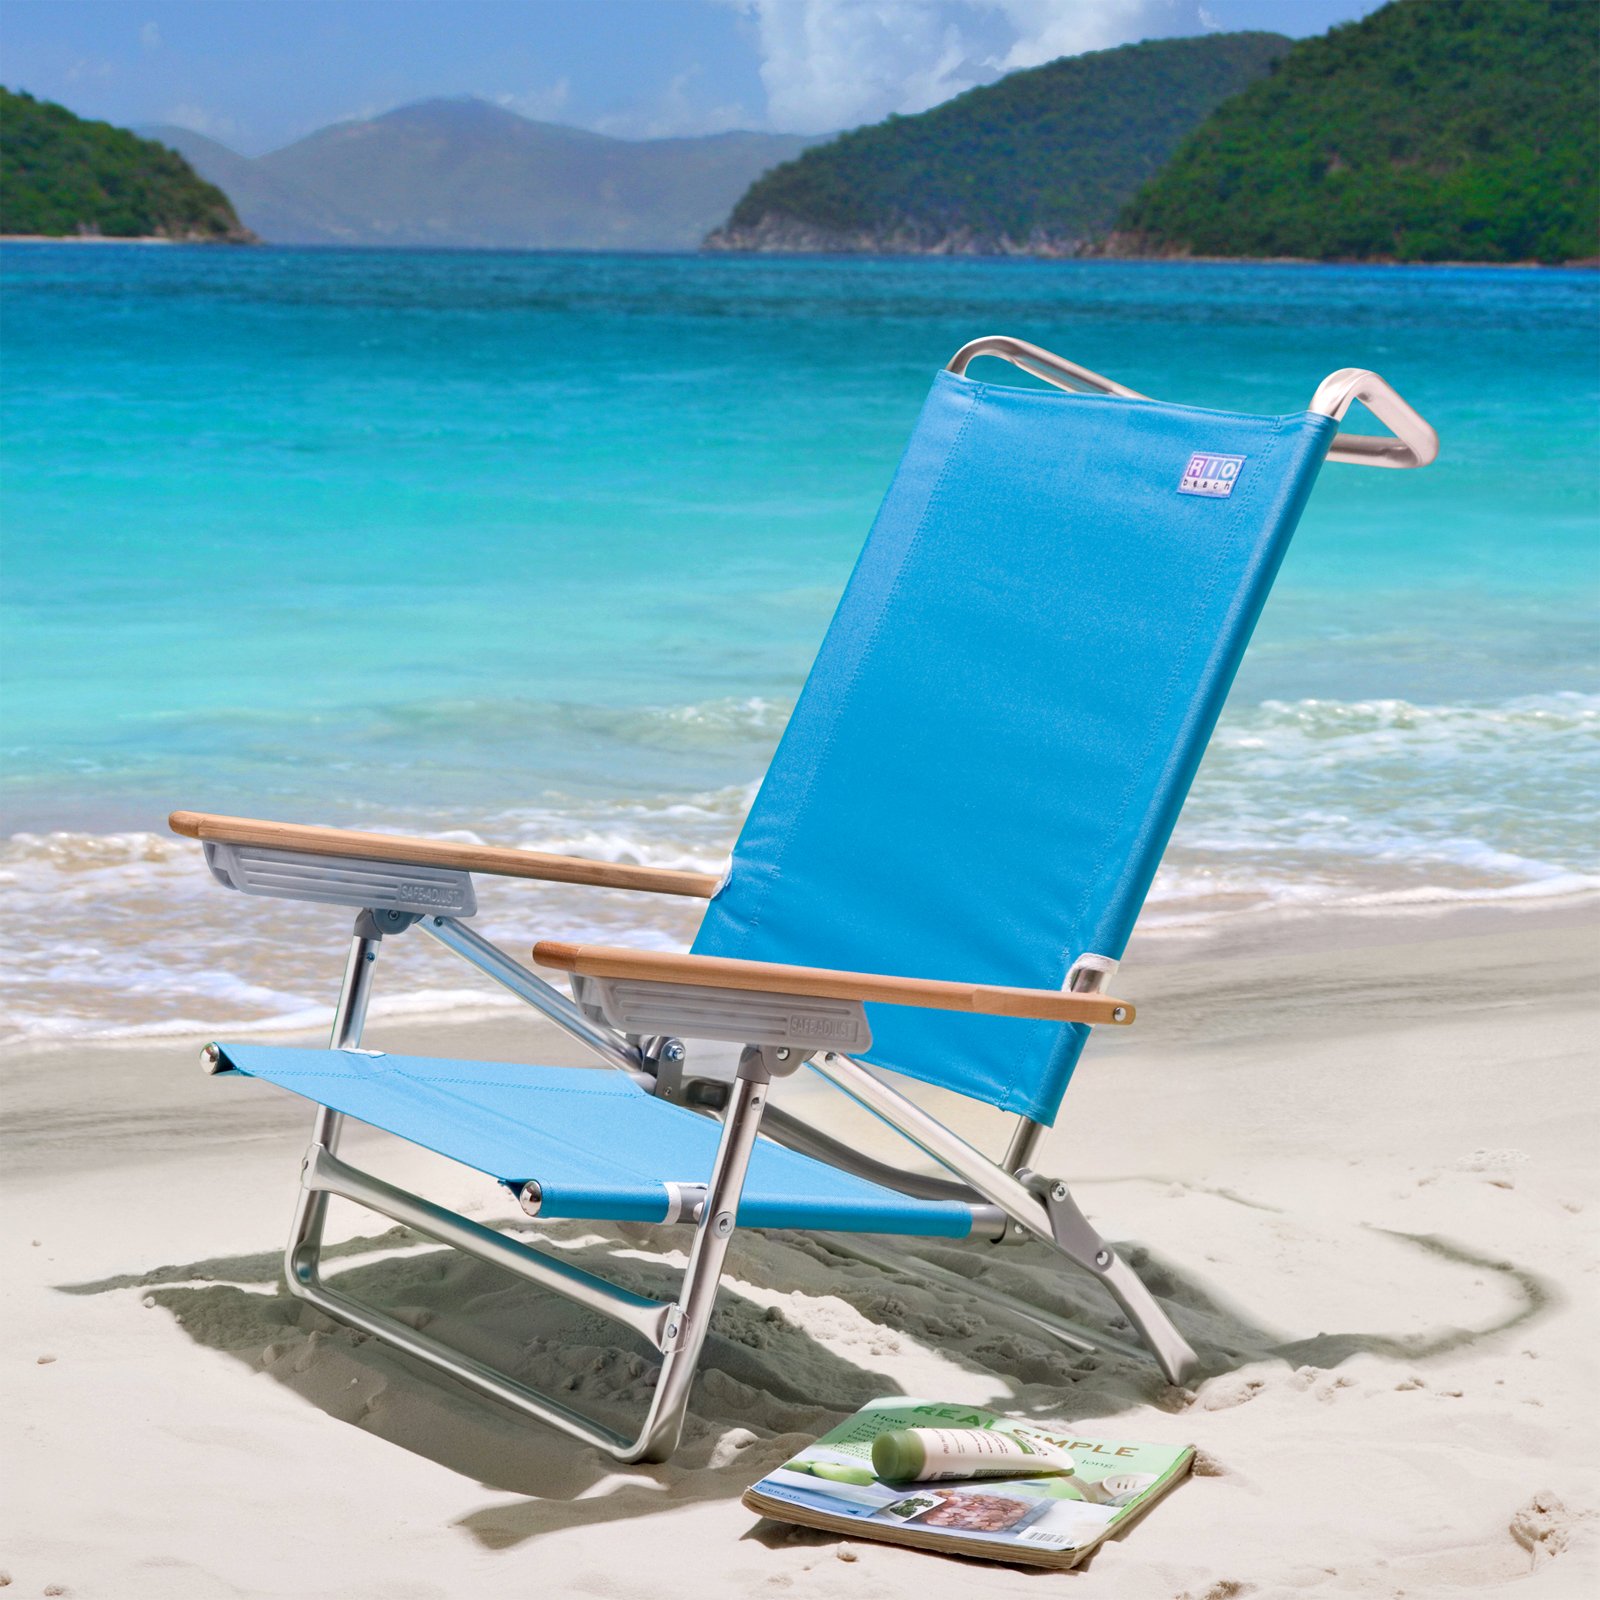 Sand Chairs For The Beach - Sadgururocks.Com